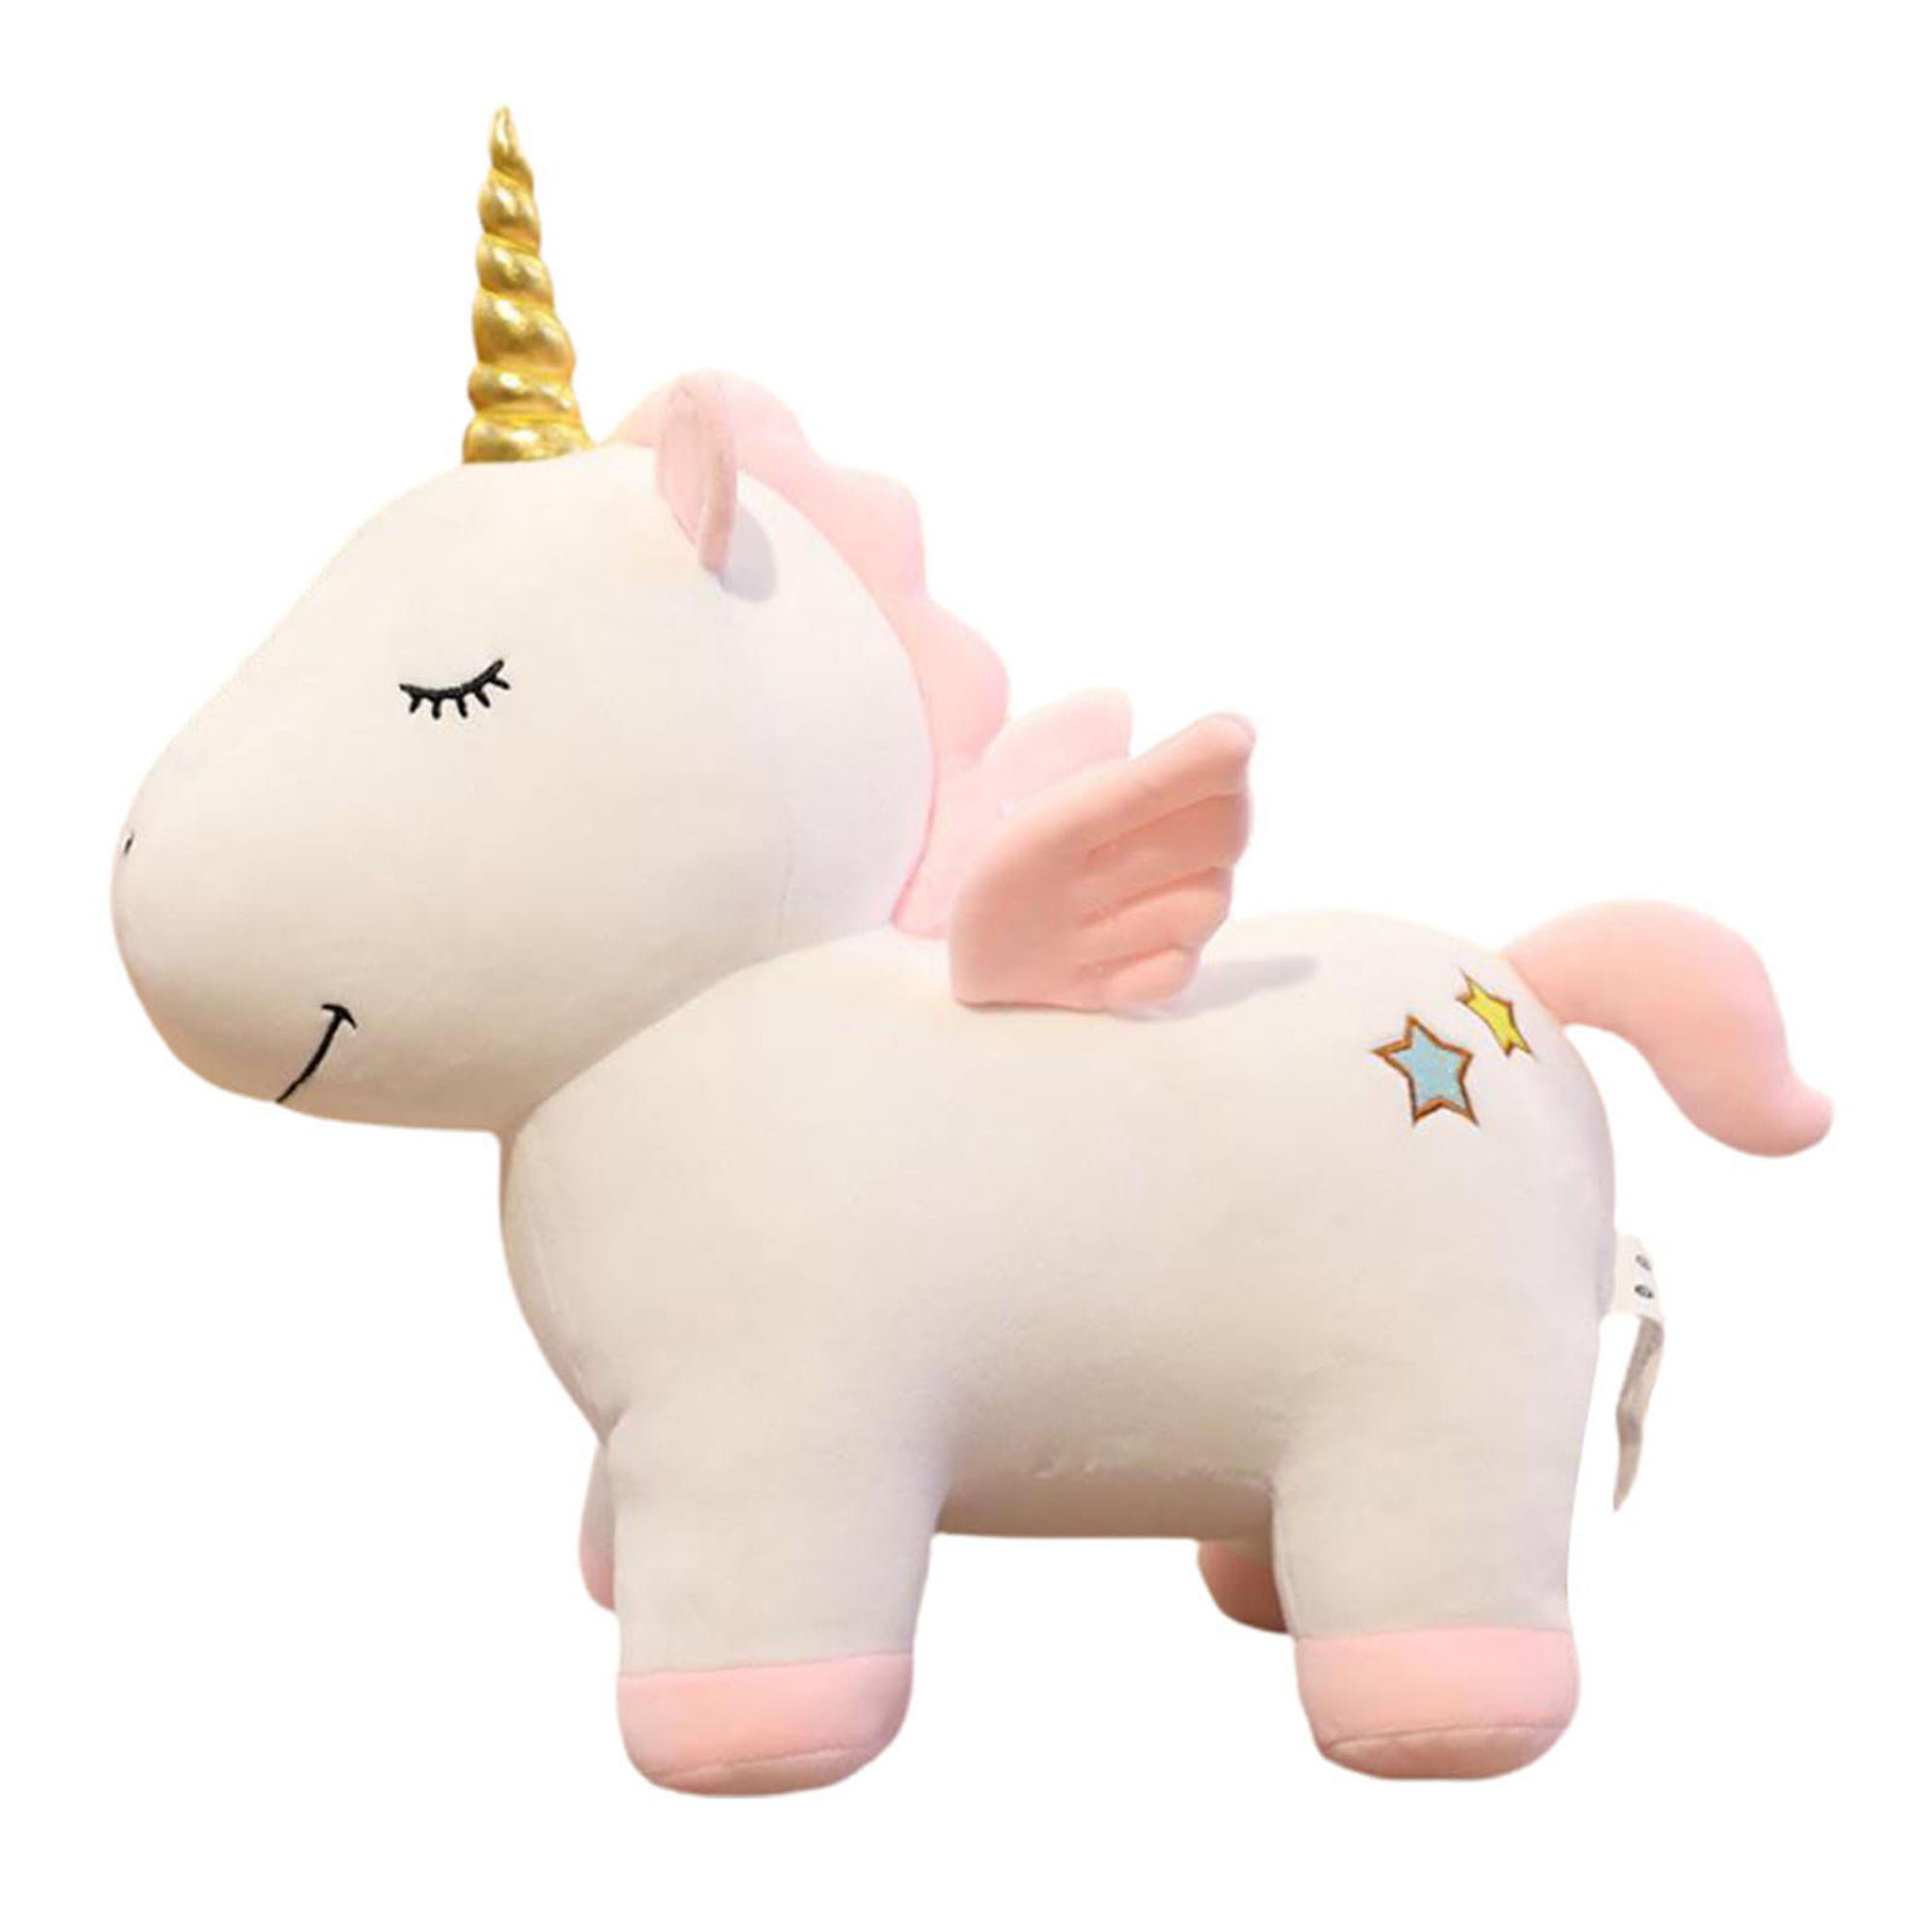 plush toy stuffed doll cartoon animal Unicorn head sleep rest pilow cushion gift 